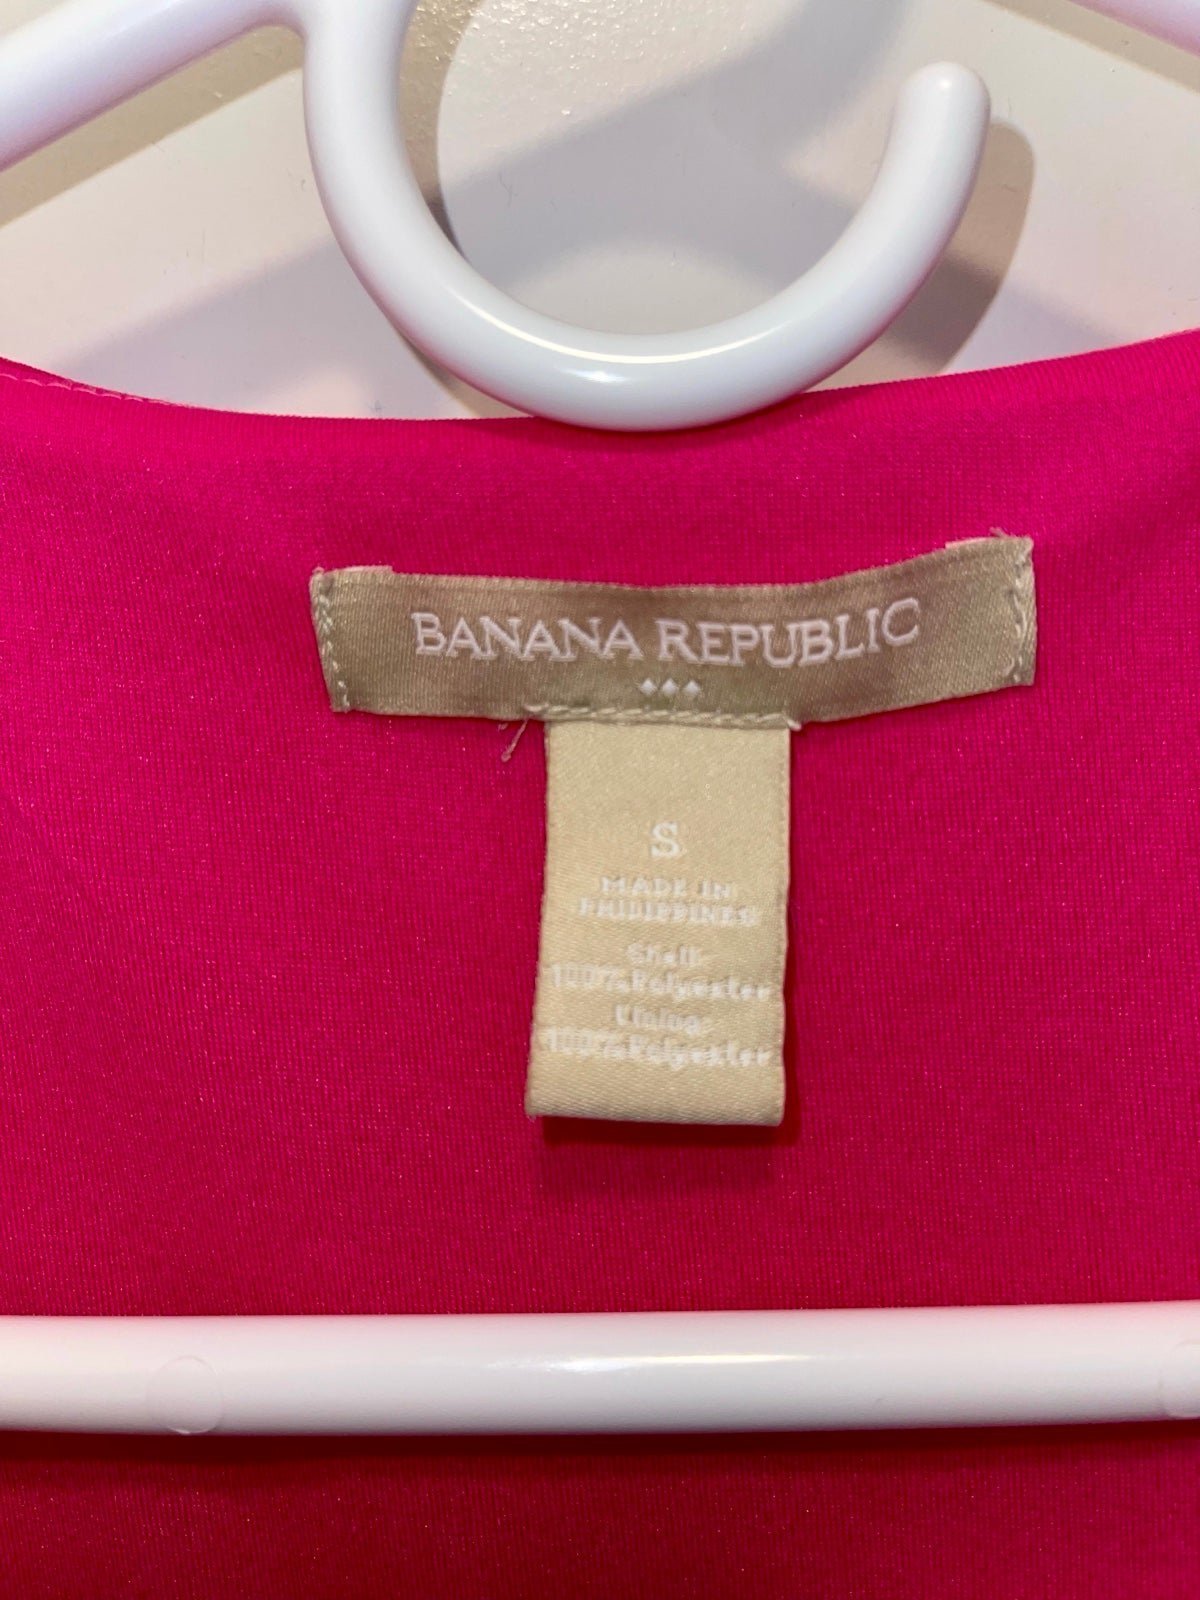 Discounted Banana Republic Pink Blouse Small jURAyMAPk for sale